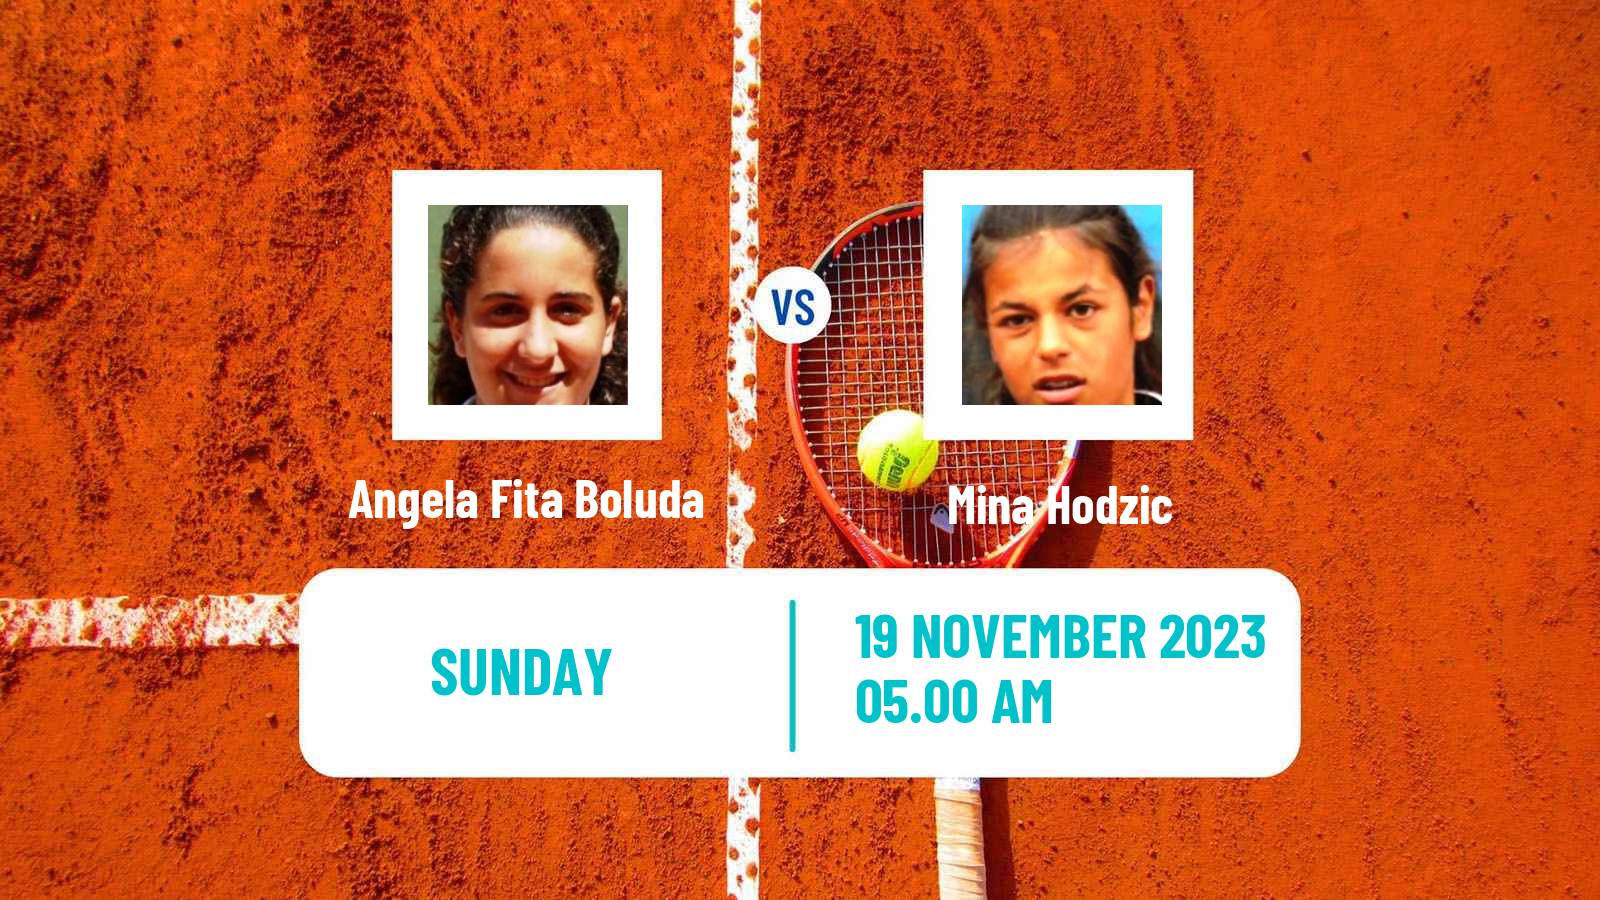 Tennis ITF W15 Nules Women Angela Fita Boluda - Mina Hodzic